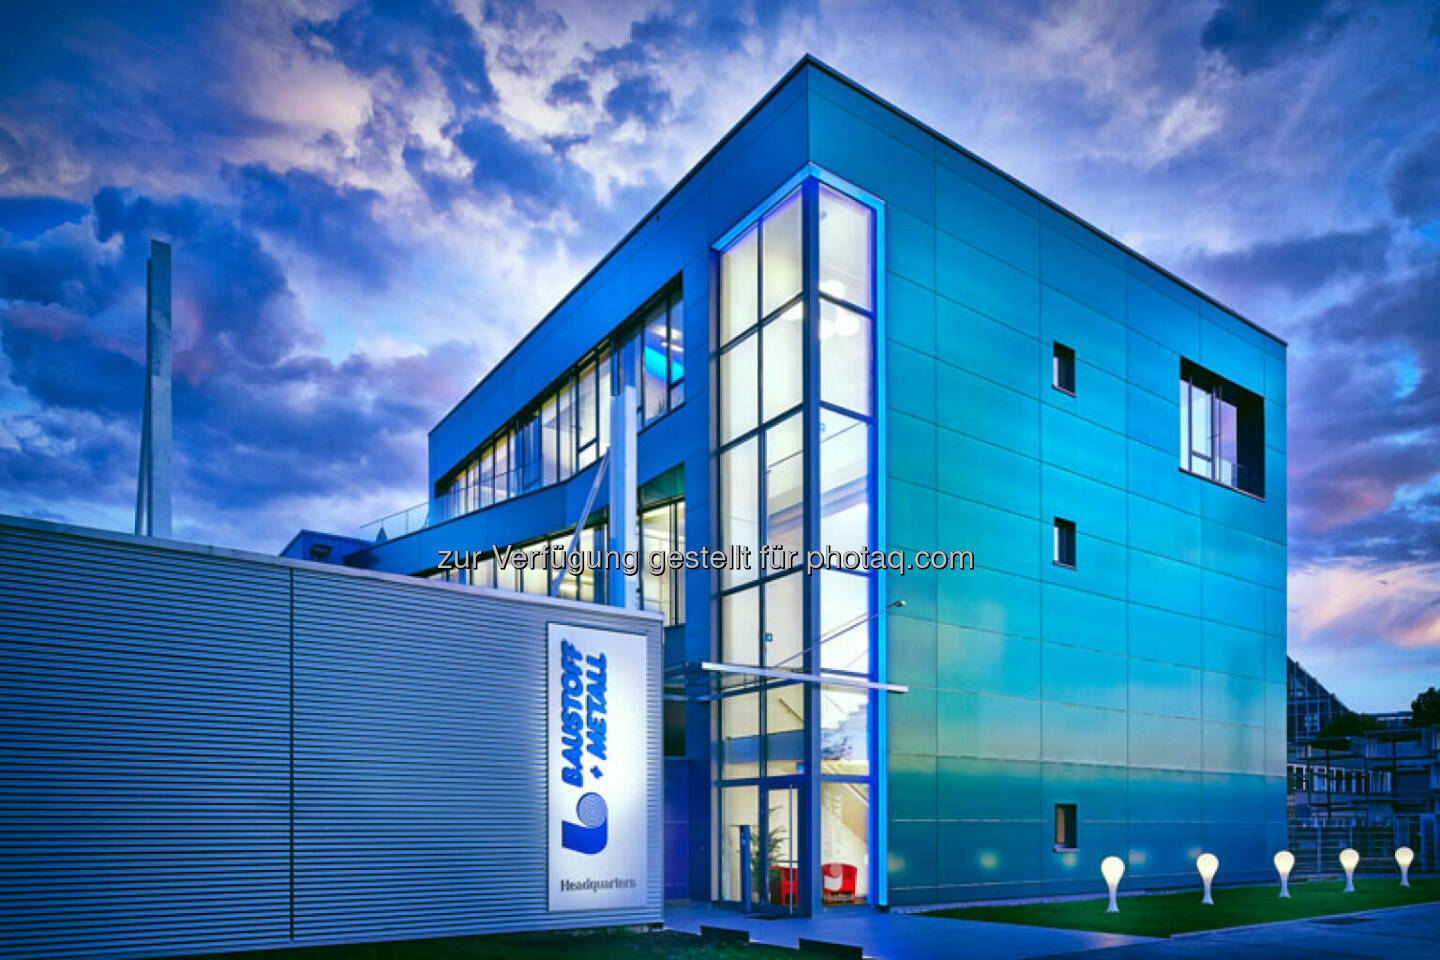 Baustoff + Metall GmbH Headquarter (Bild: Baustoff + Metall) 